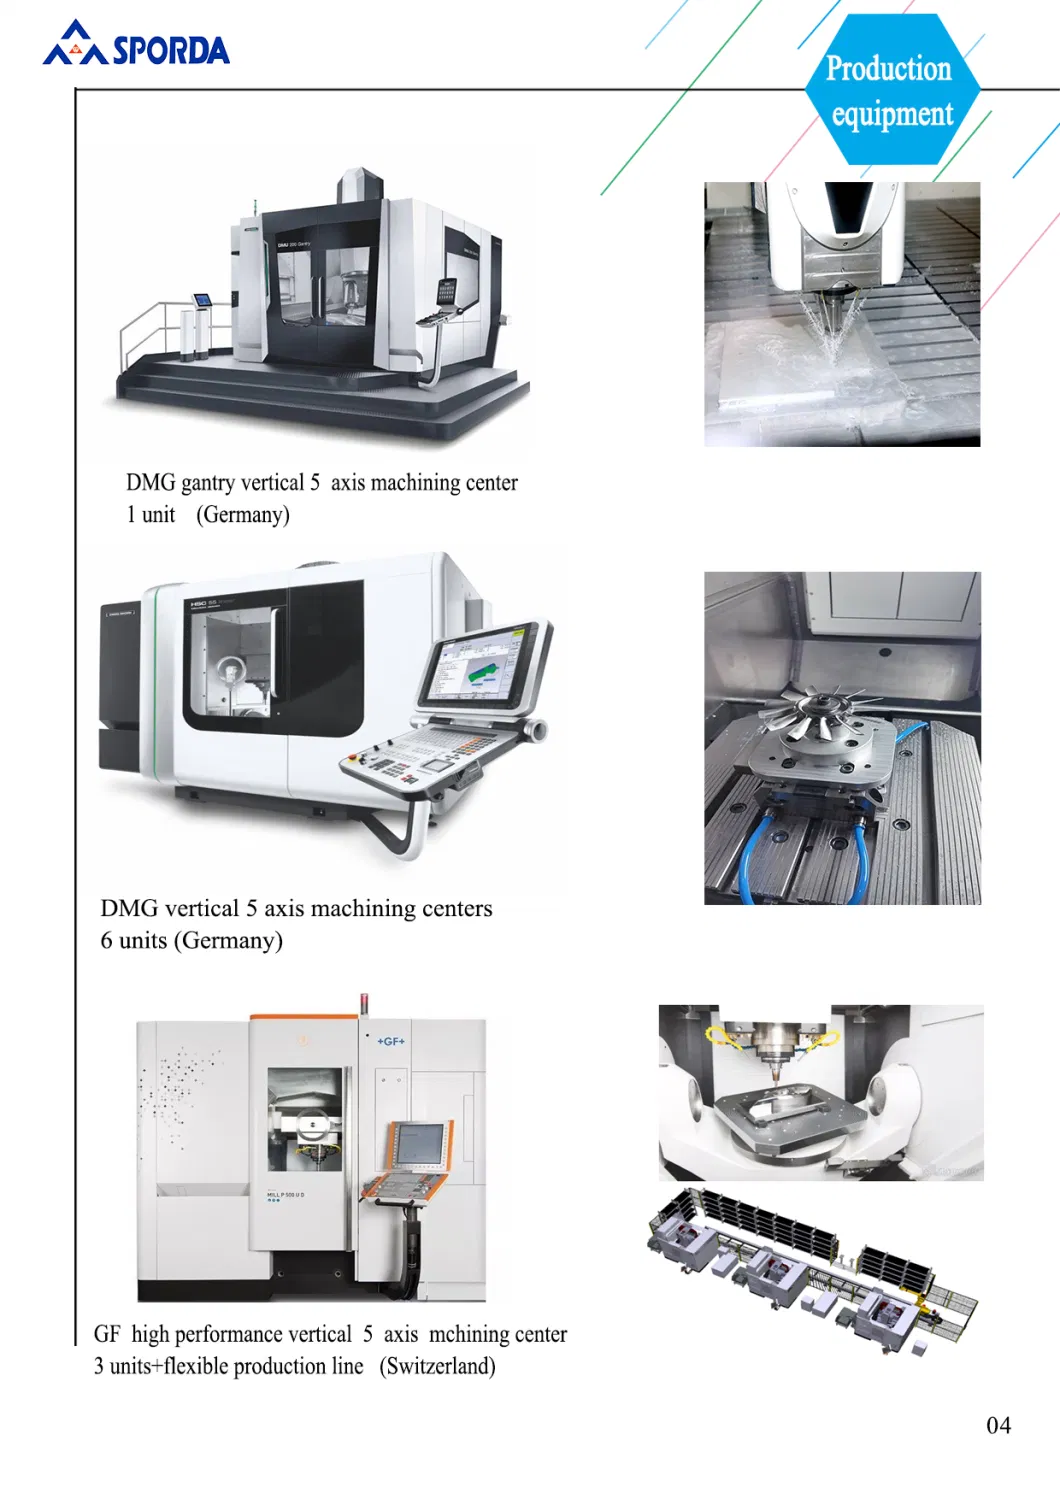 Expert Aluminum Design Specialists Advanced CNC Prototyping Services